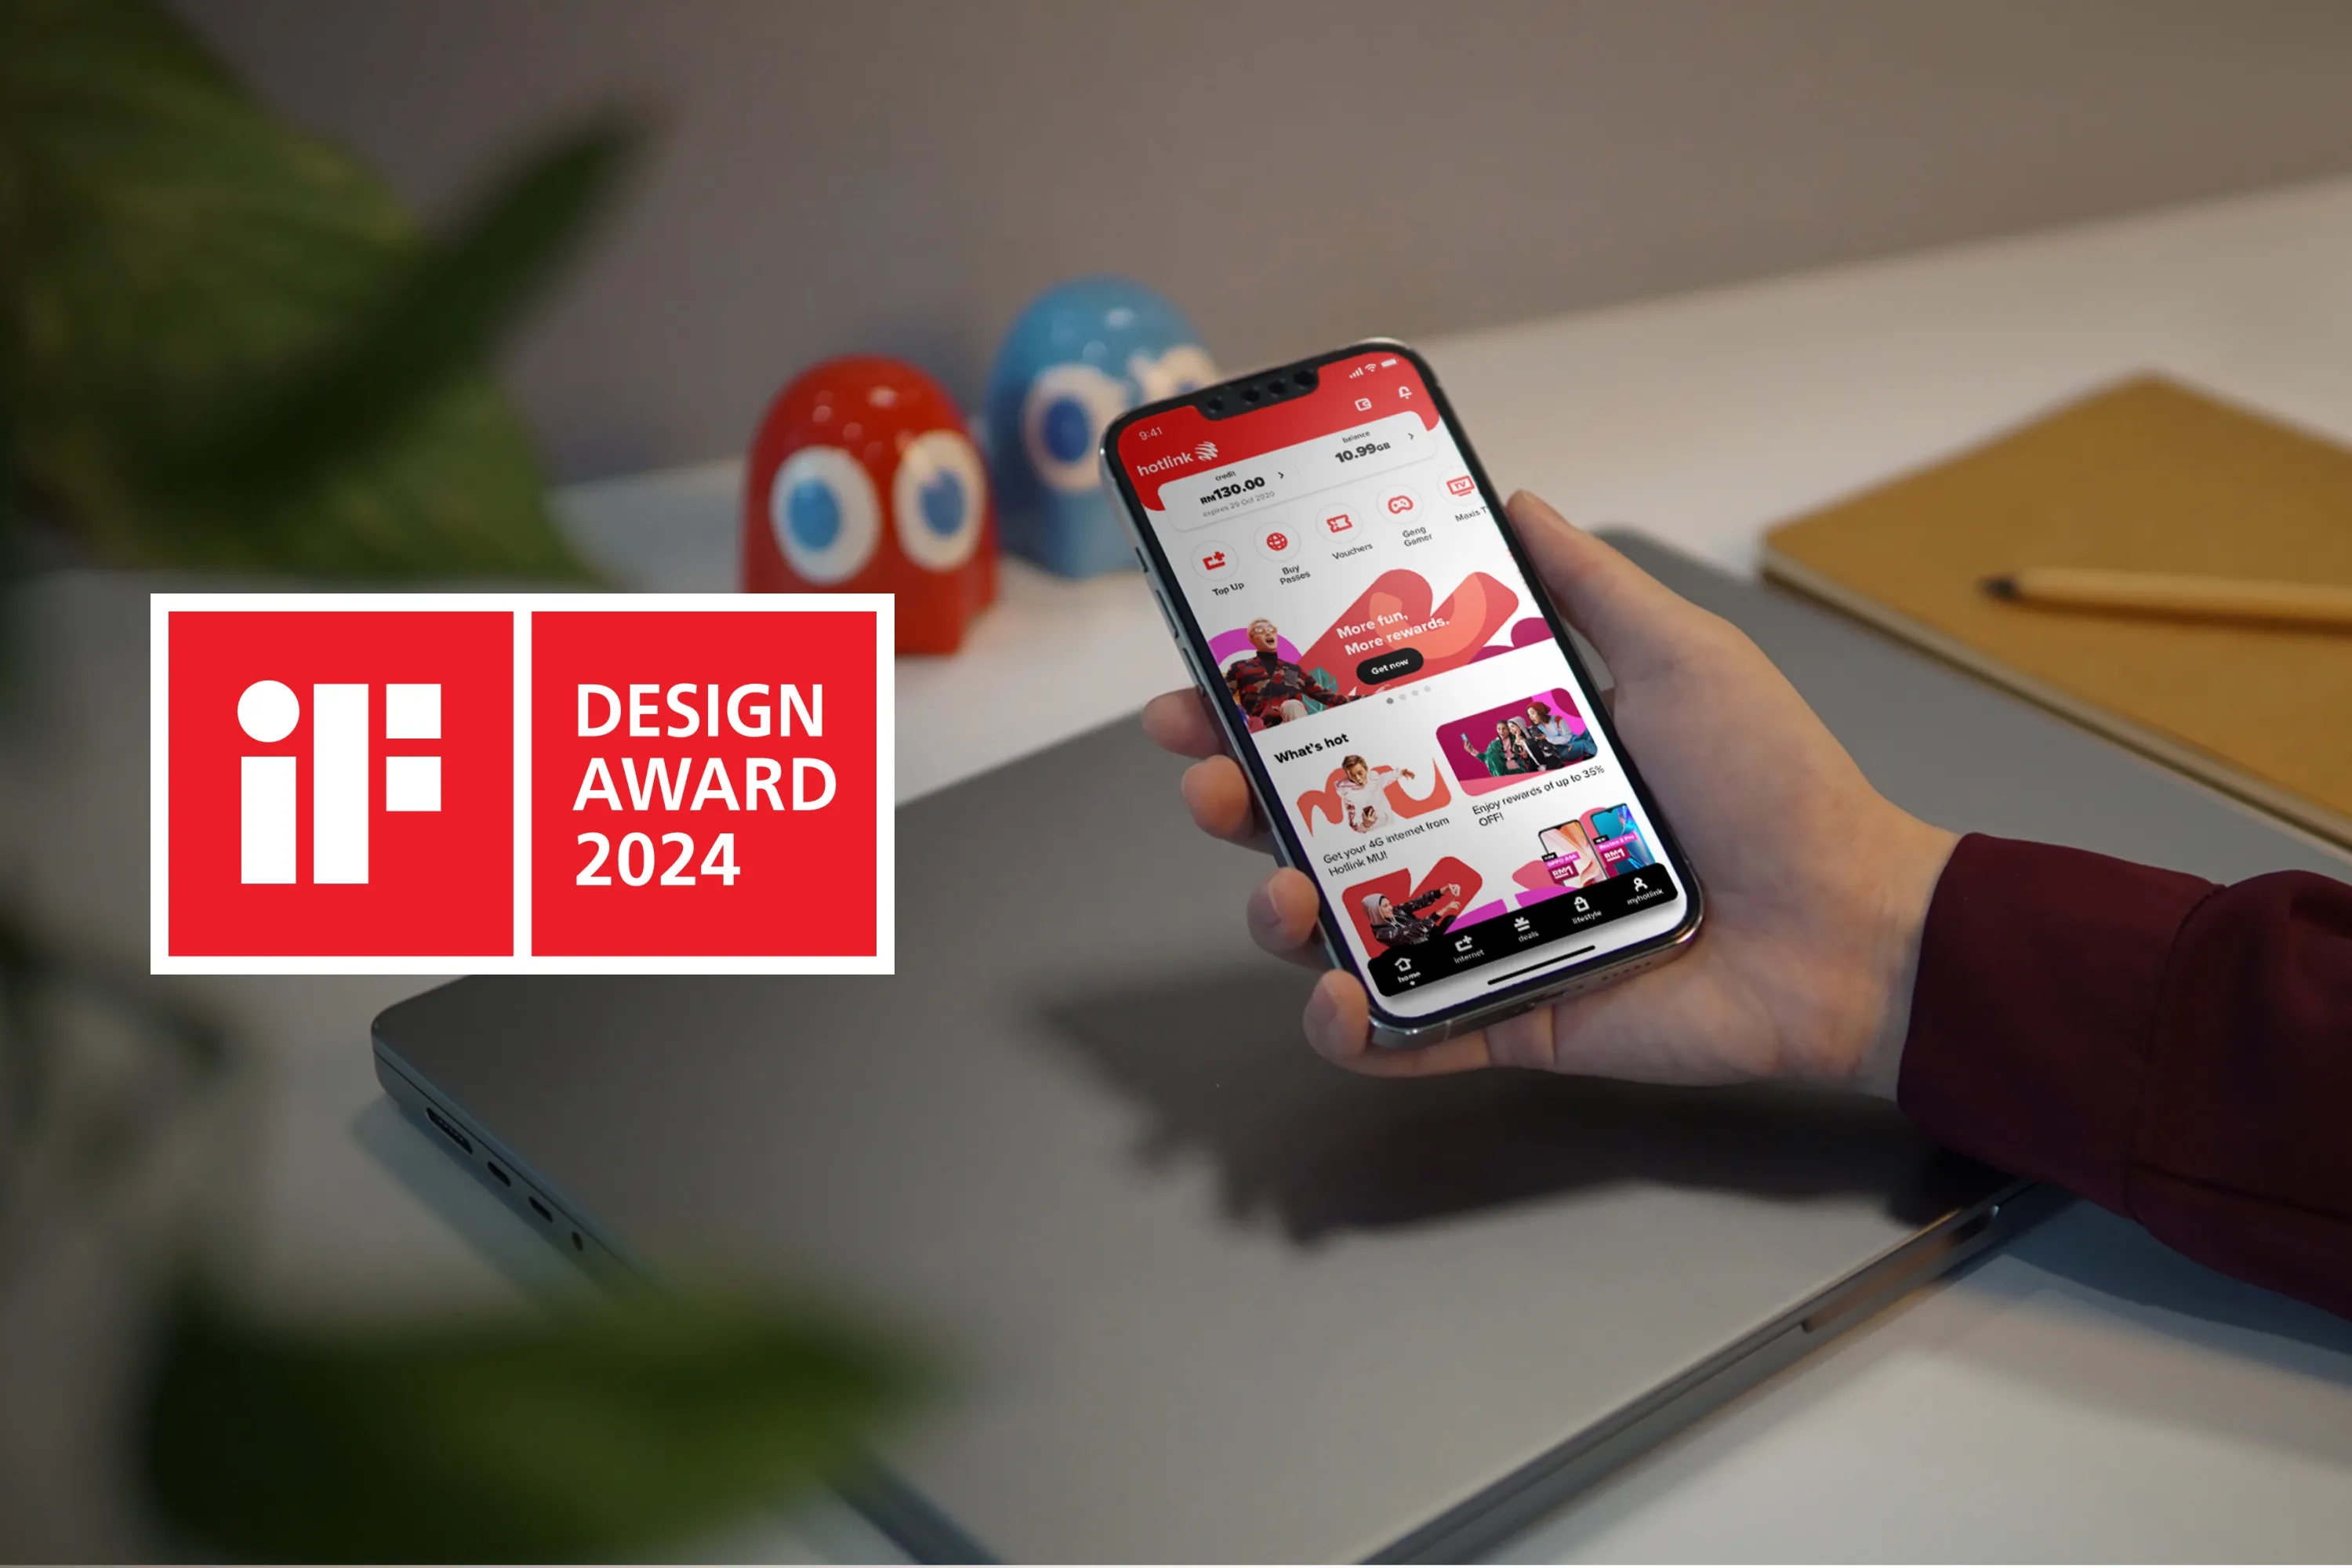 Maxis’ Hotlink mobile app wins prestigious international iF Design Award 2024